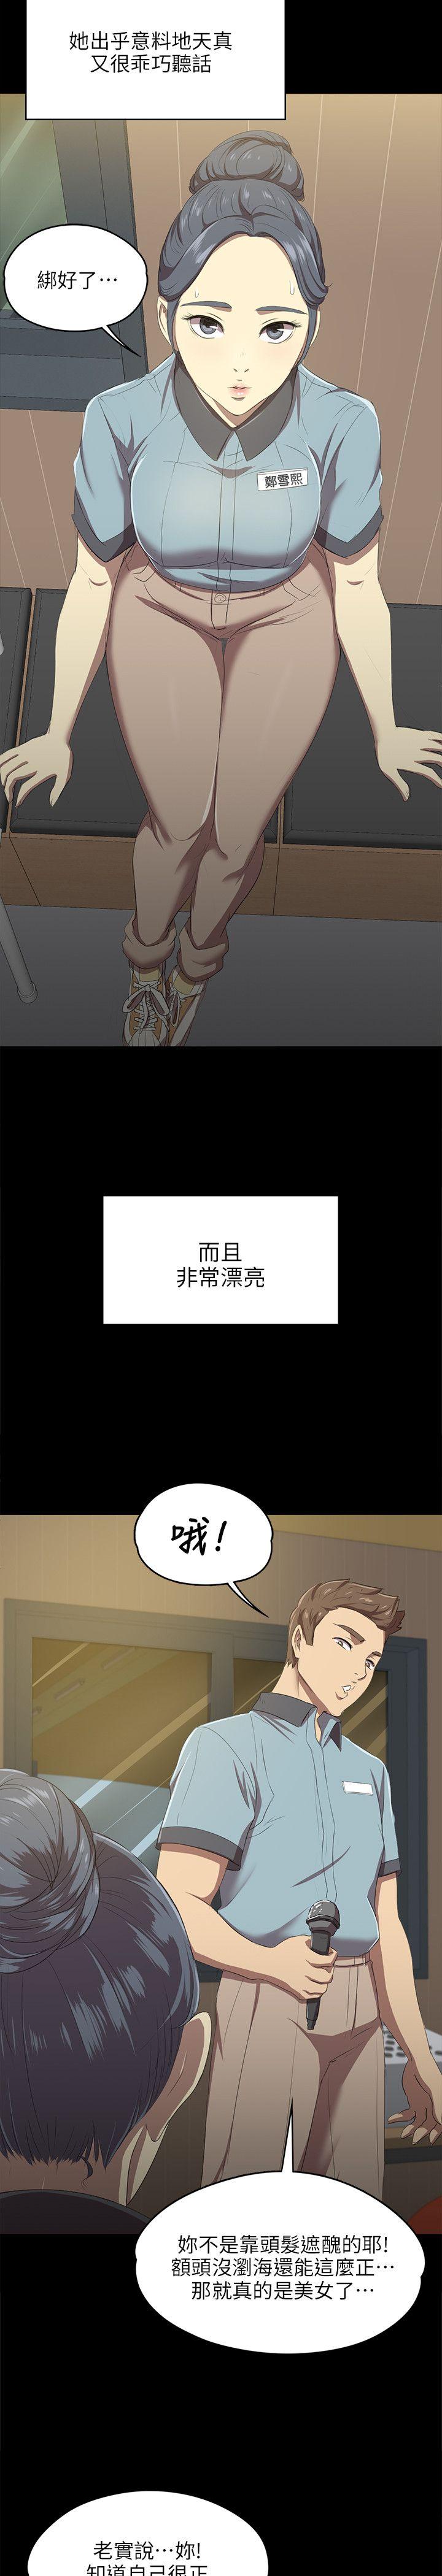 [J&B&活火山]KTV情人 EP.1(正體中文)高畫質版本 19